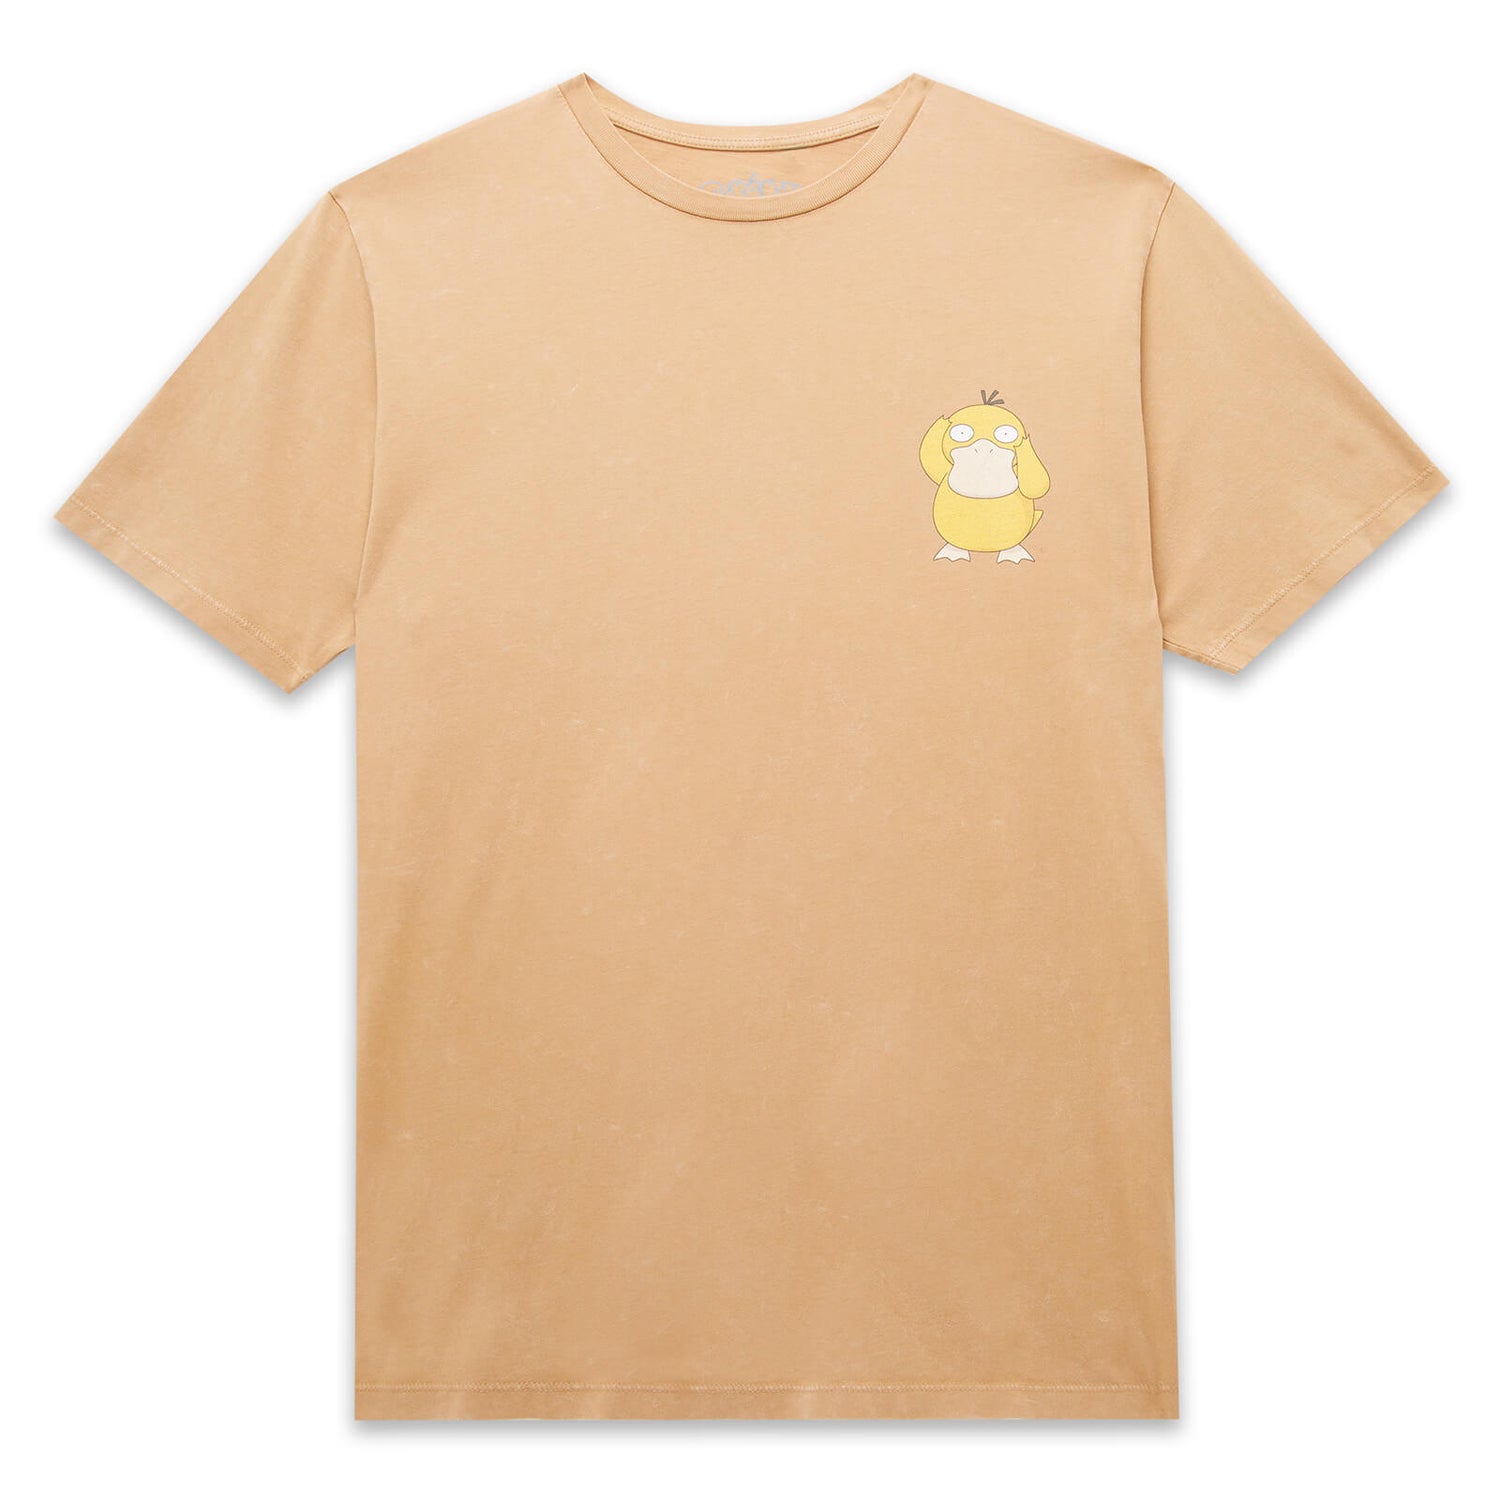 Pokémon Psyduck Unisex T-Shirt - Tan Acid Wash